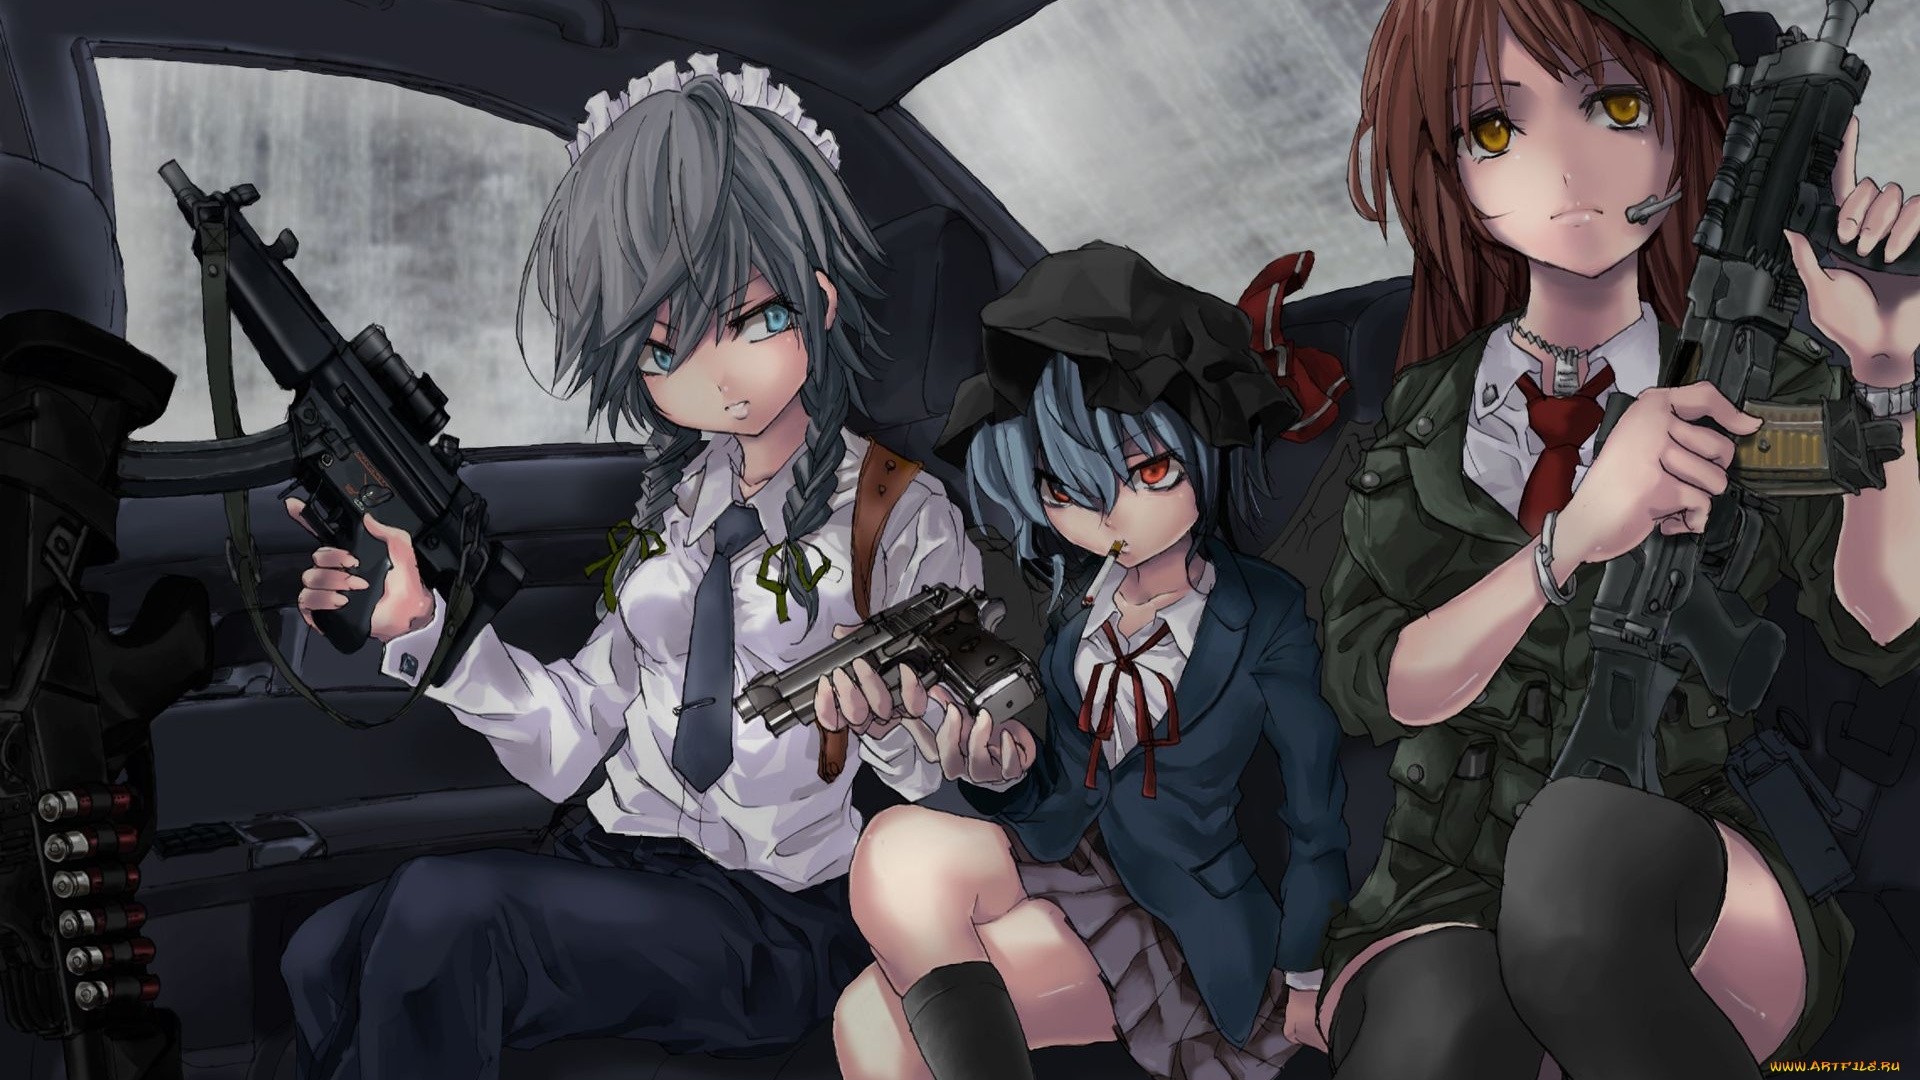 Anime Girls With Guns Wallpaper Free